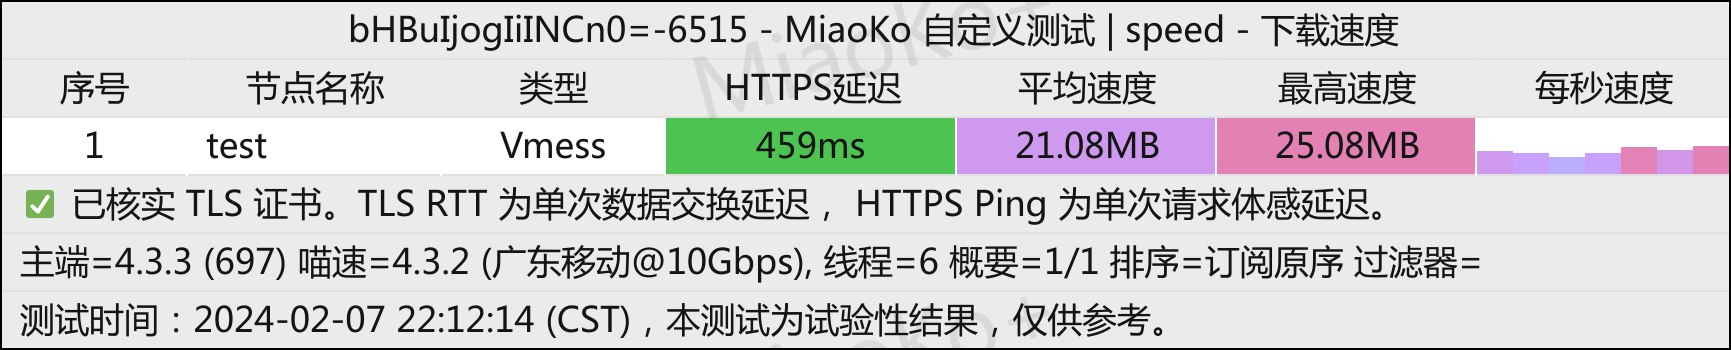 Haruka|香港vps测评|1TB@1Gbps|月付$4.5|解锁奈飞|最低7折